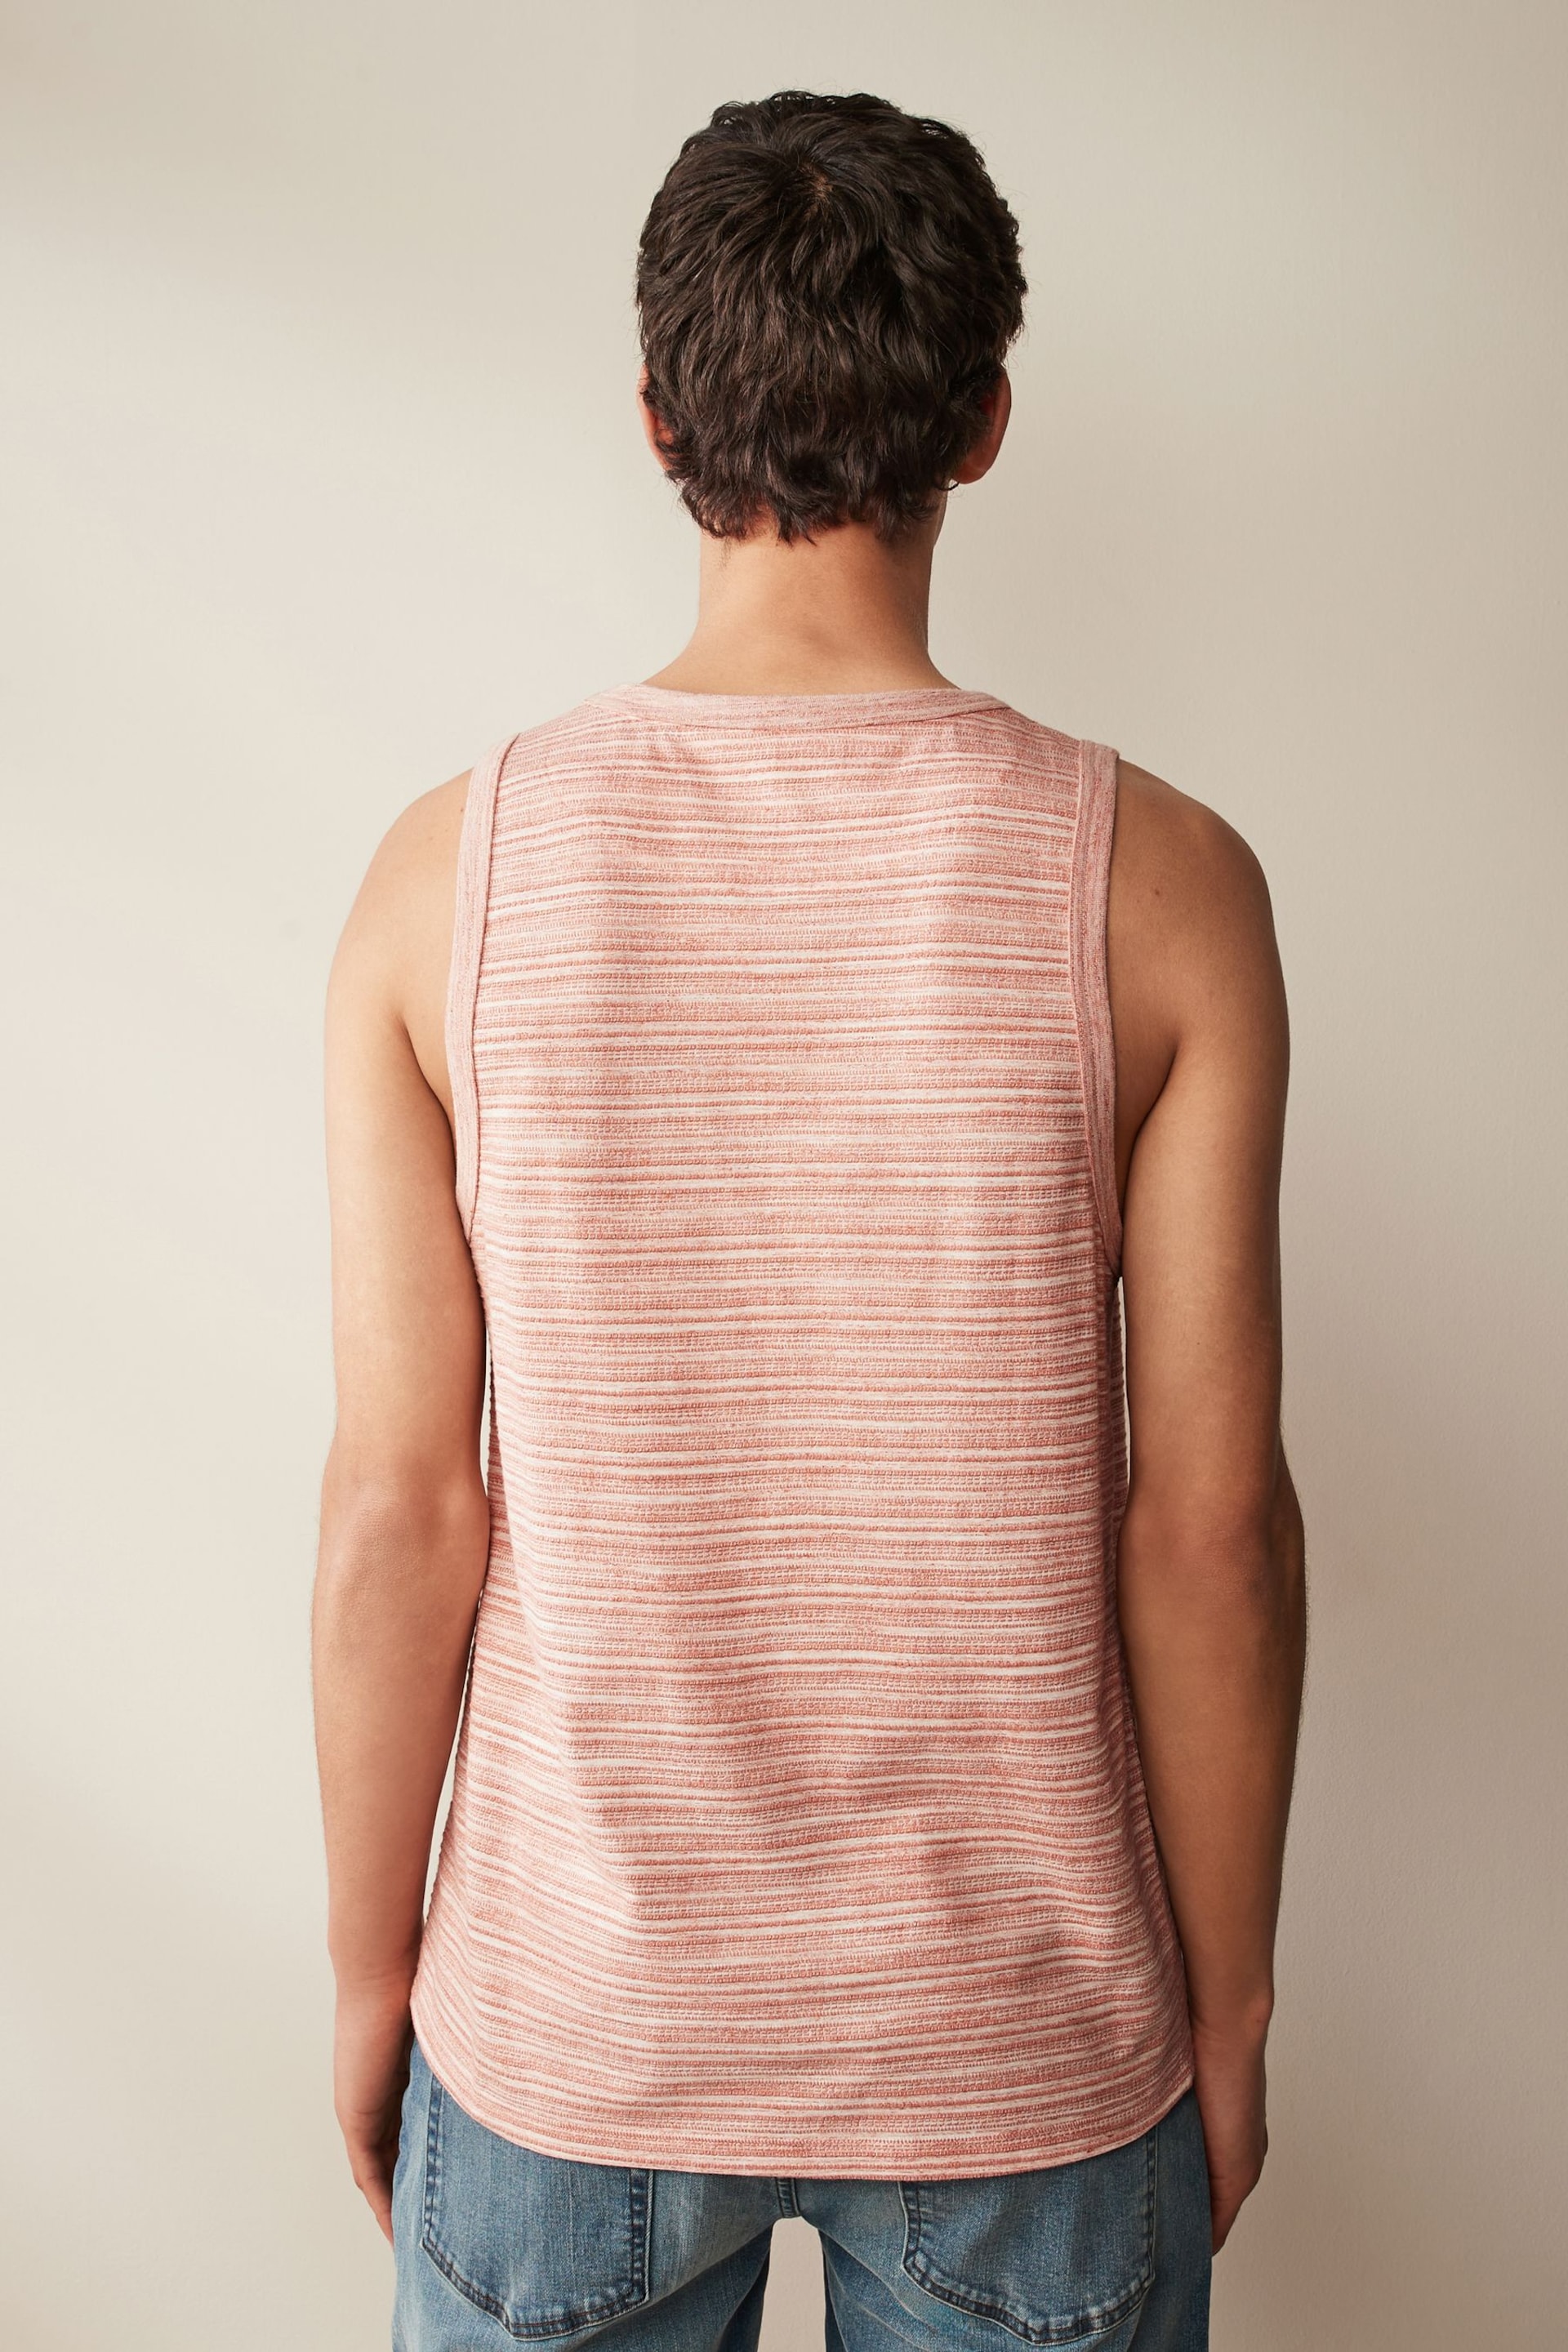 Coral Pink Textured Vest - Image 4 of 7